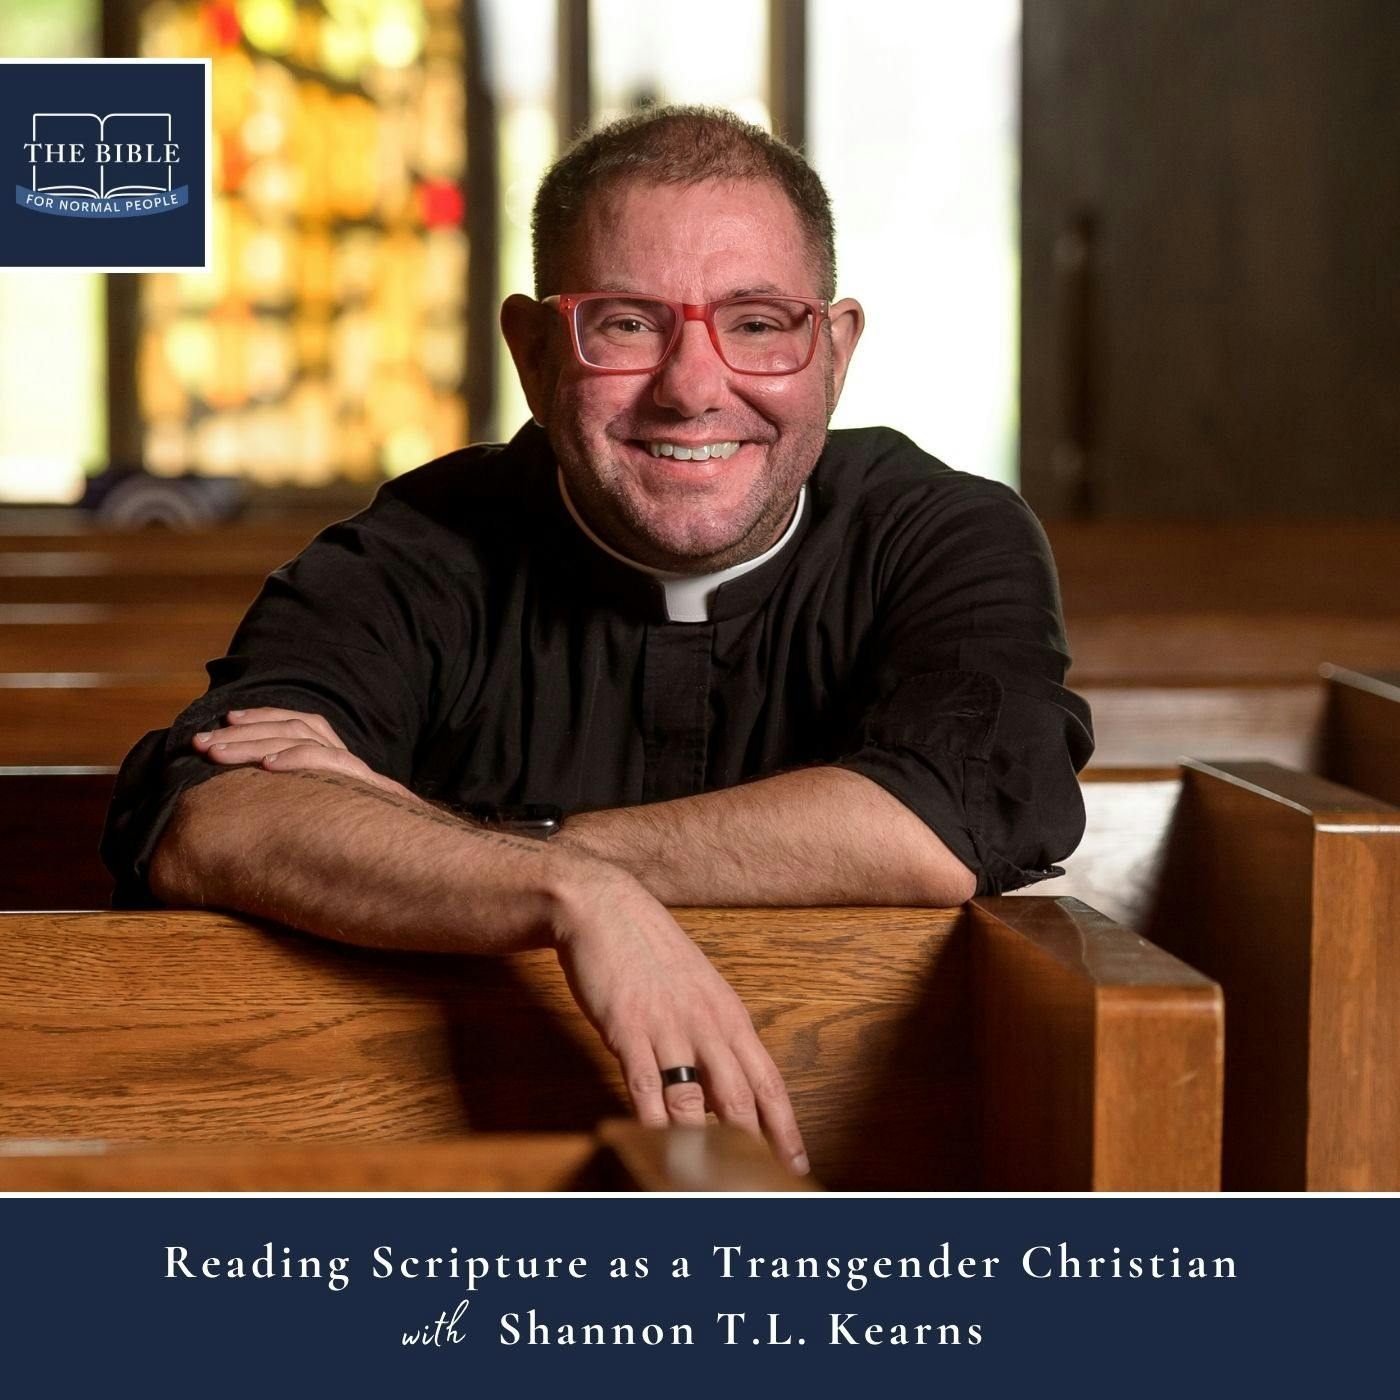 [Bible] Episode 249: Shannon T.L. Kearns - Reading Scripture as a Transgender Christian